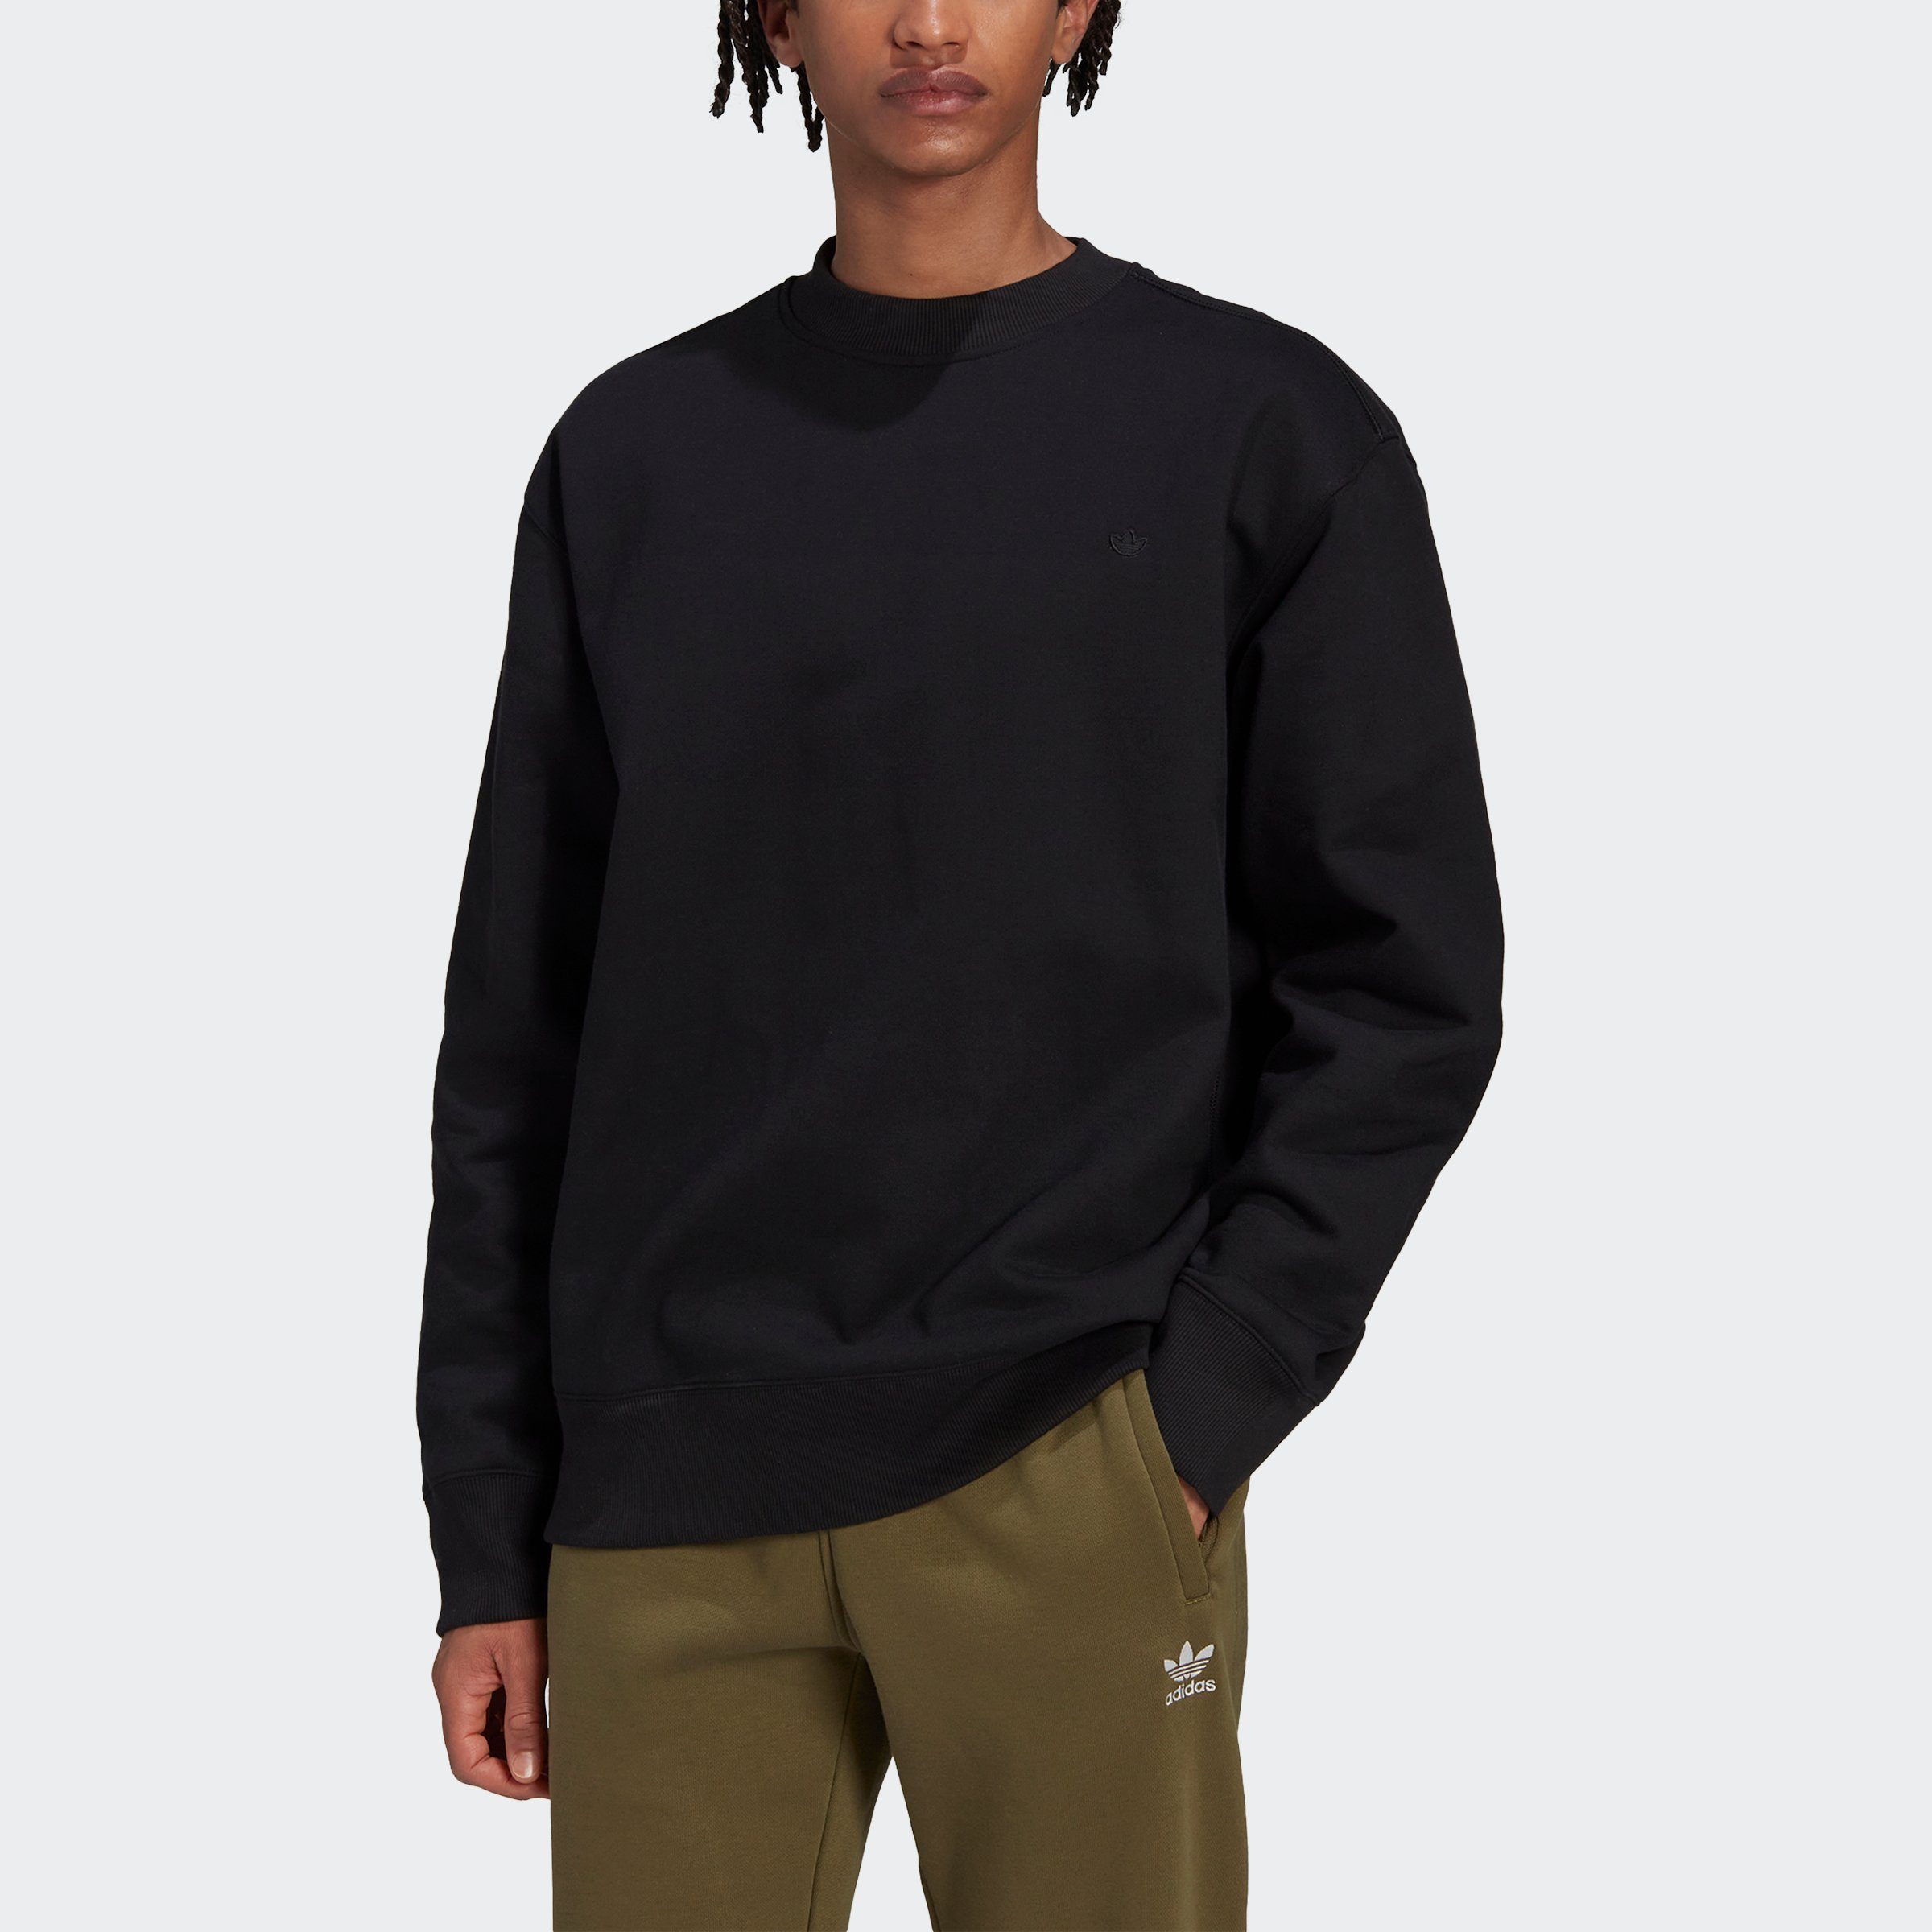 Empfohlene Neuheiten adidas Originals Sweatshirt C Crew black